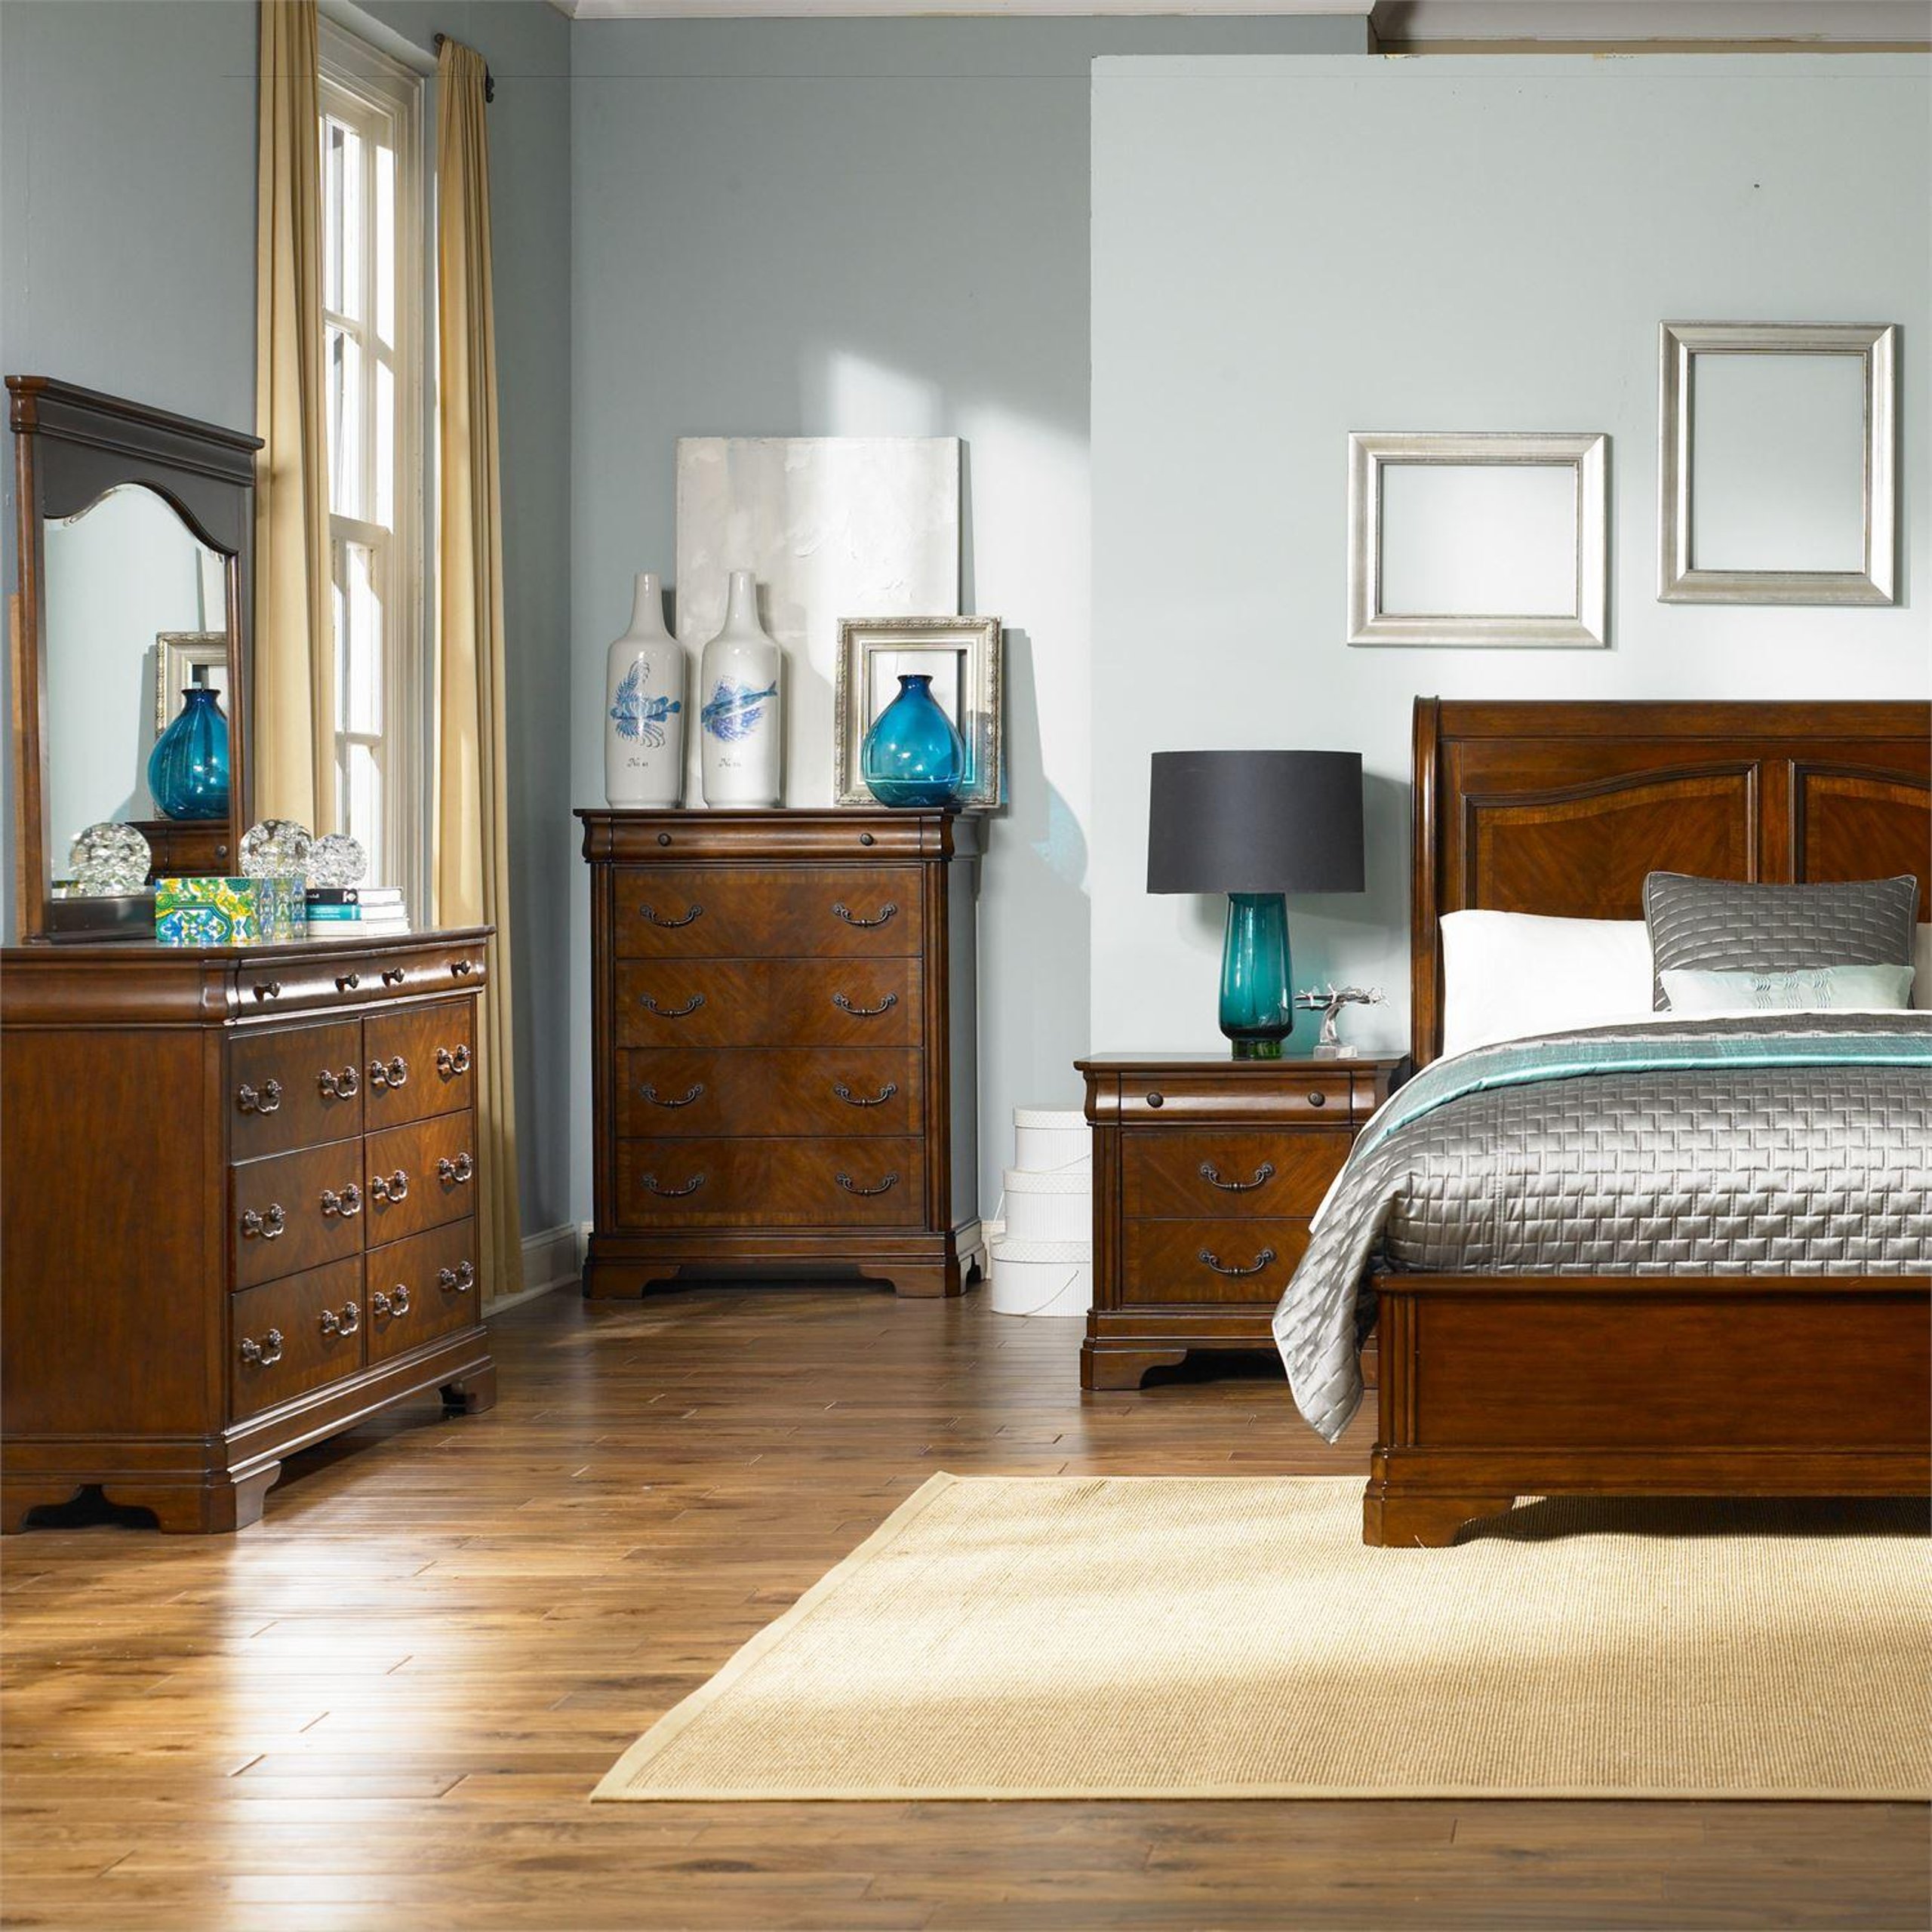 Liberty Furniture Bedroom Queen Sleigh Bed, Dresser and Mirror